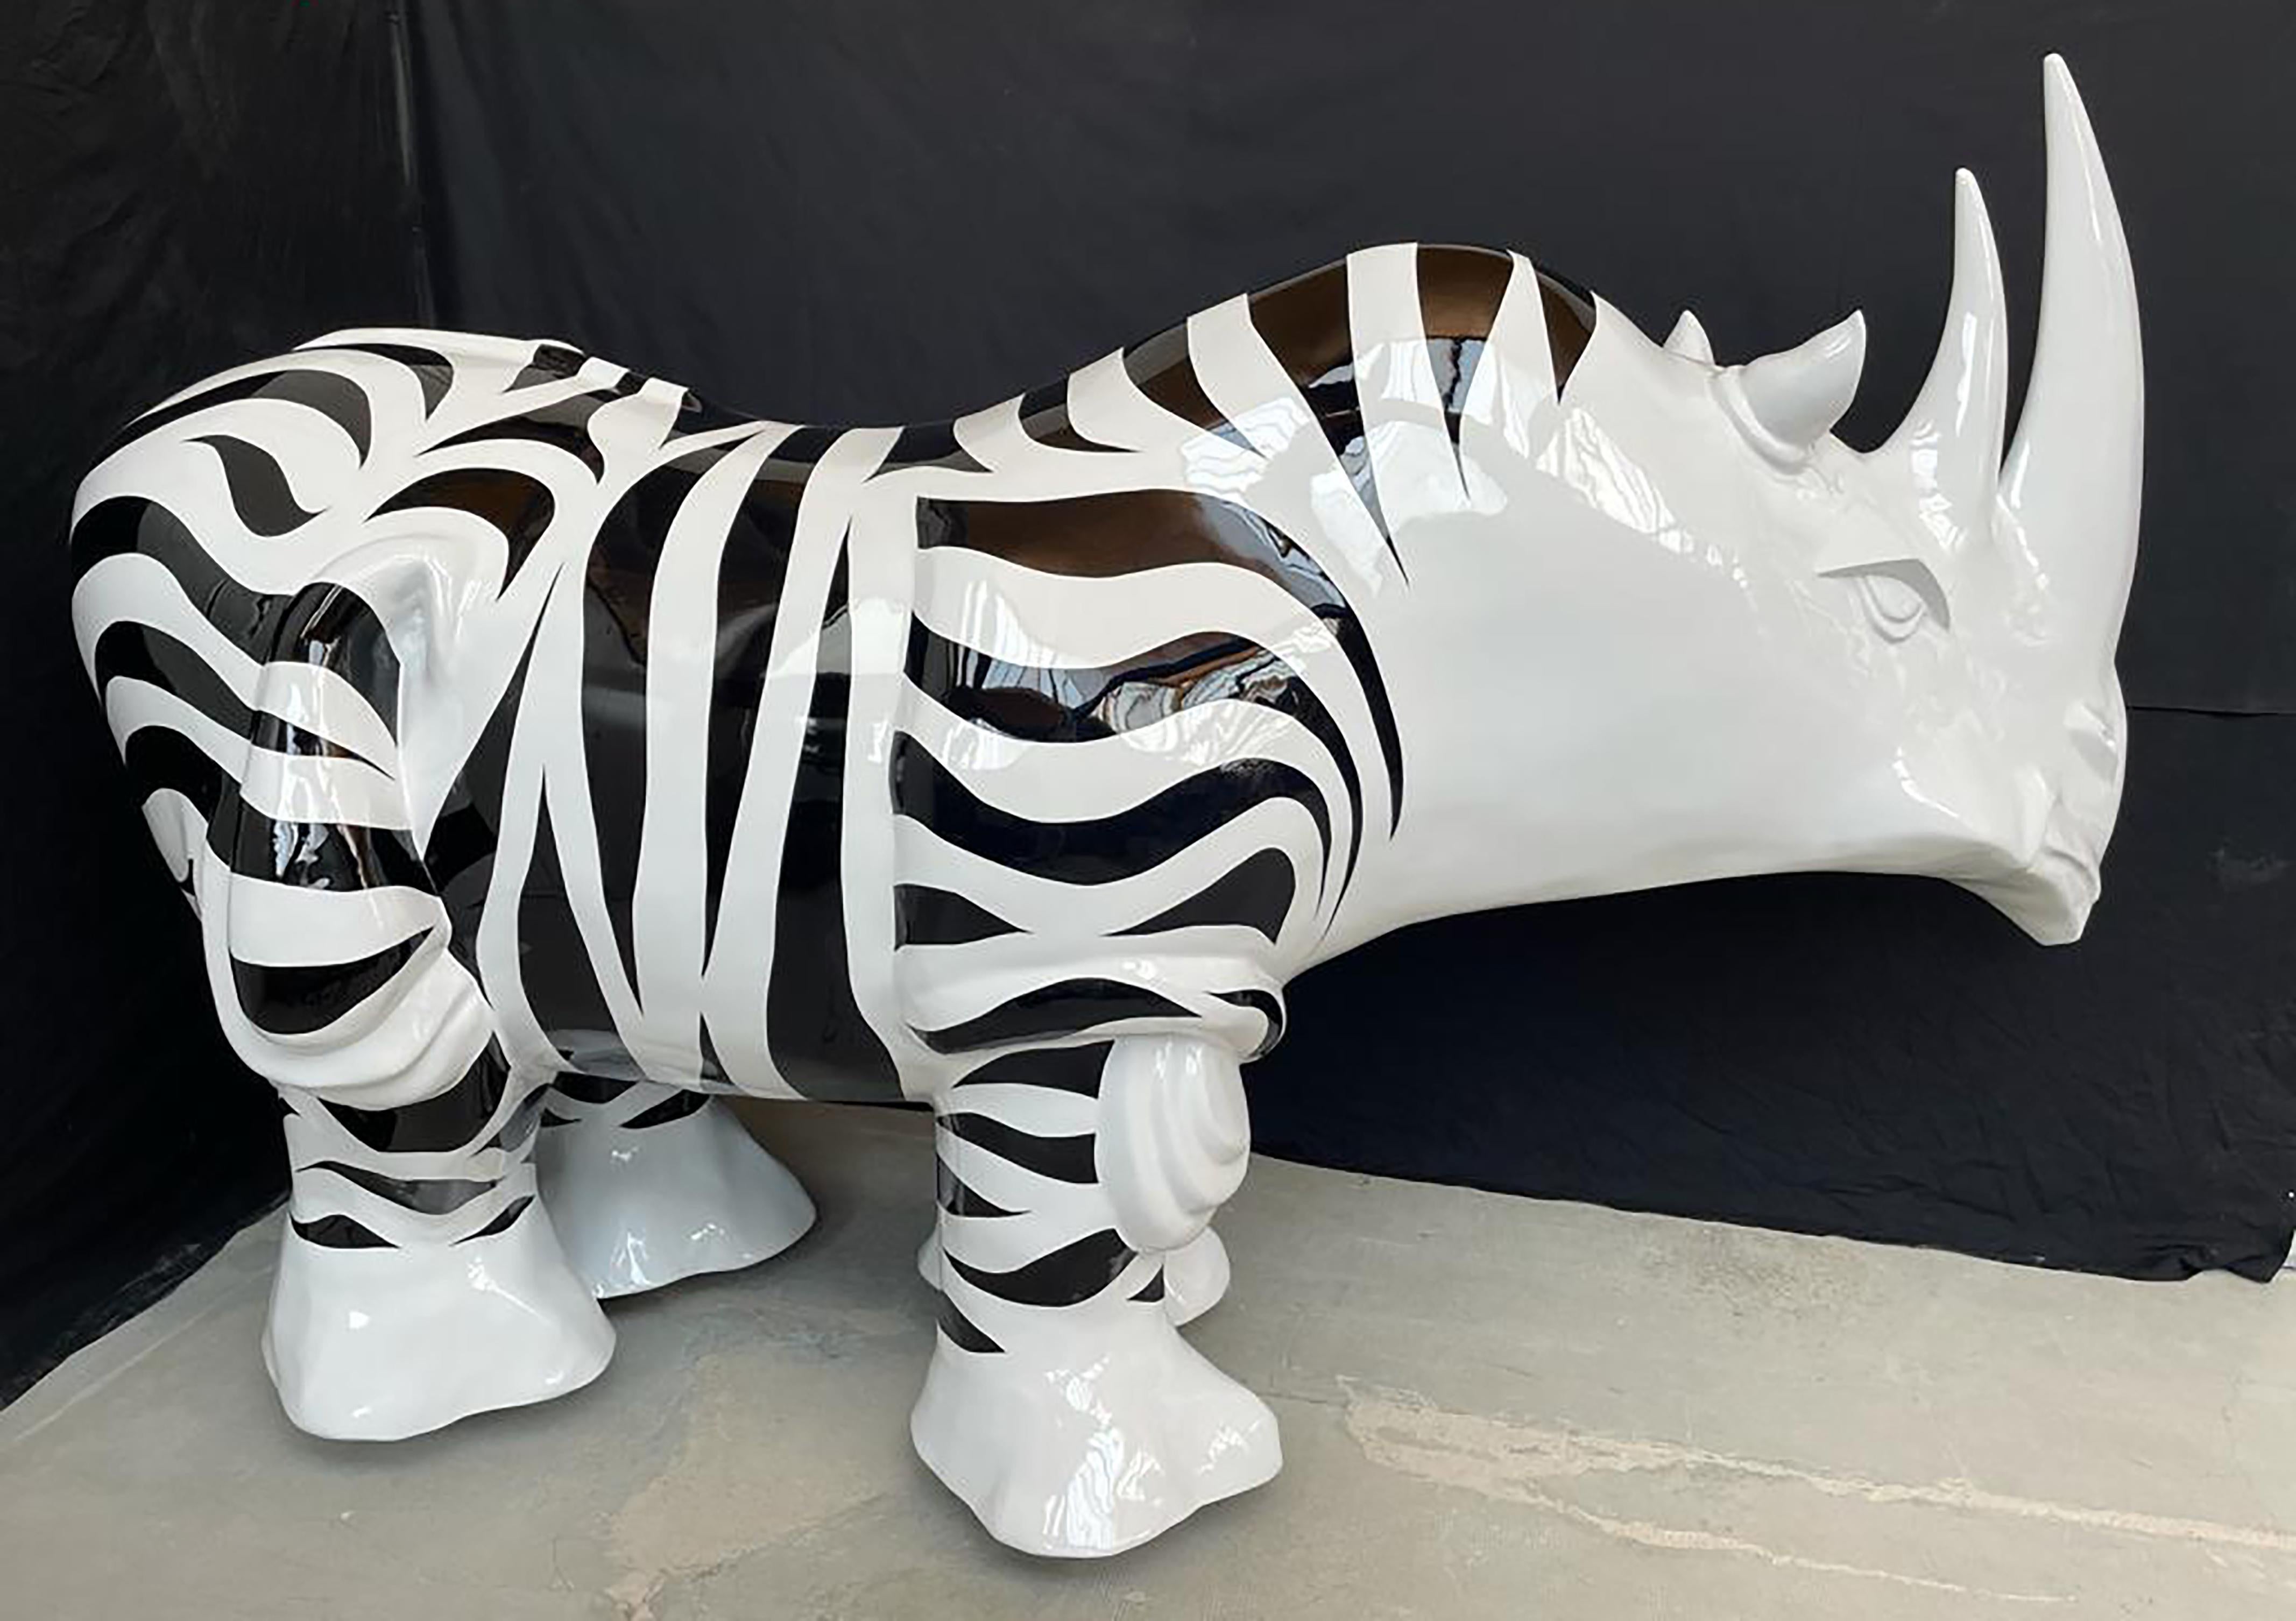 Rhinozebros 340 - Adorned with a zebra skin - Monumental Outdoor Sculpture - Black Figurative Sculpture by Patrick Schumacher